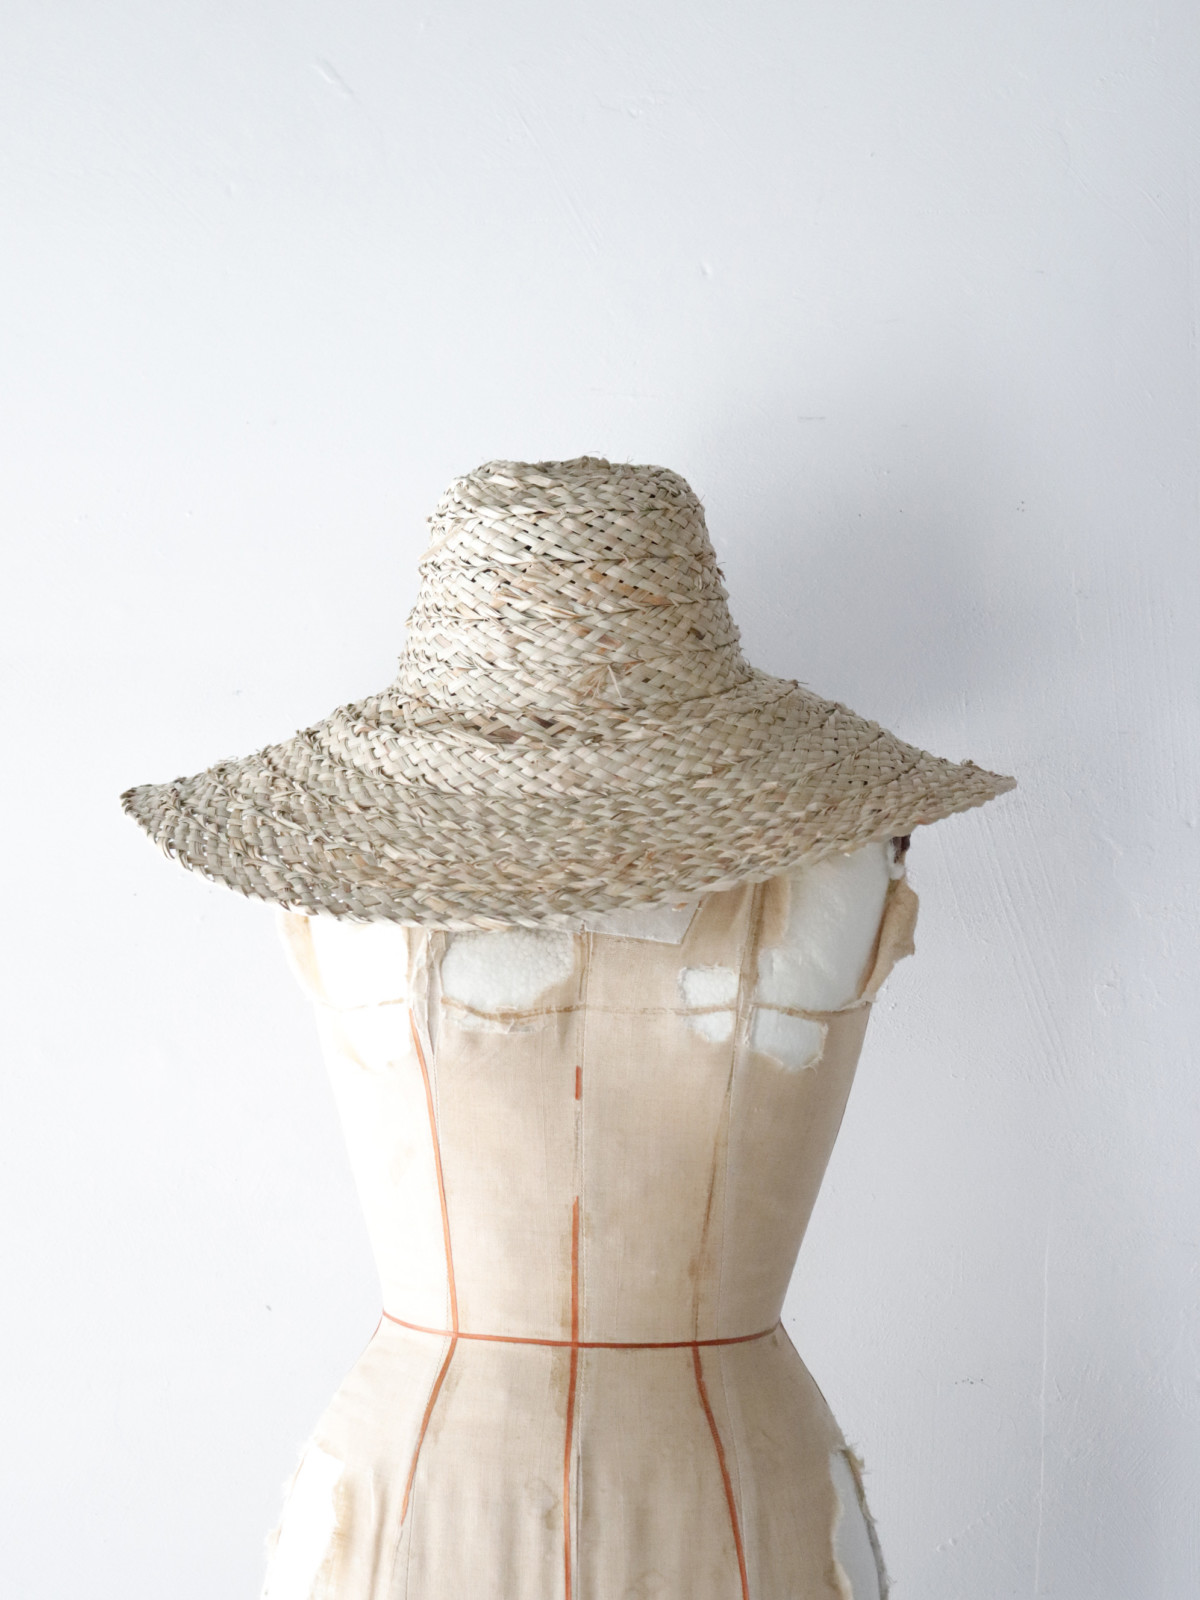 Straw hat, Africa, handmade